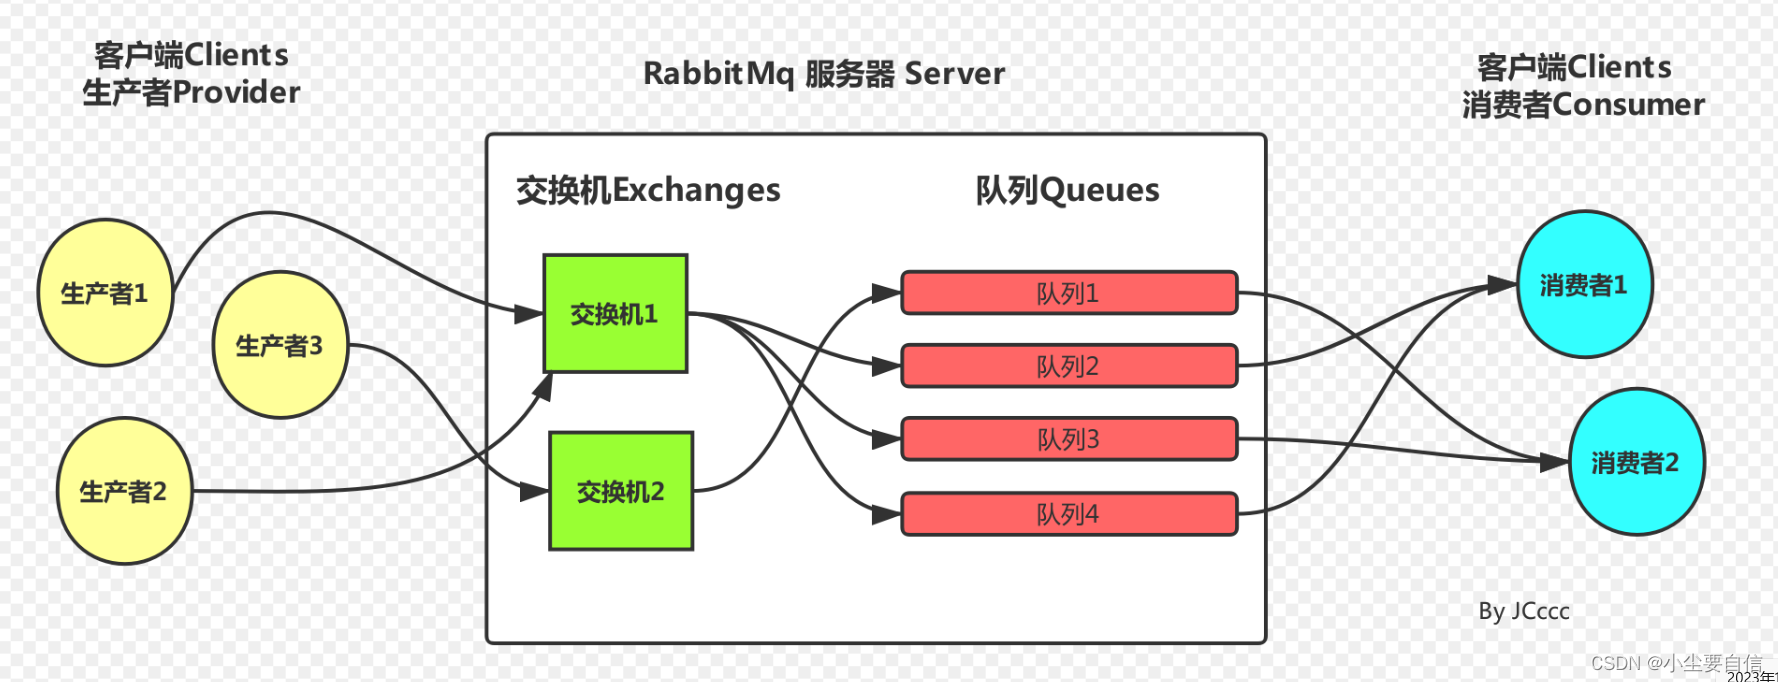 RabbitMQ：高效可靠的消息队列解决方案